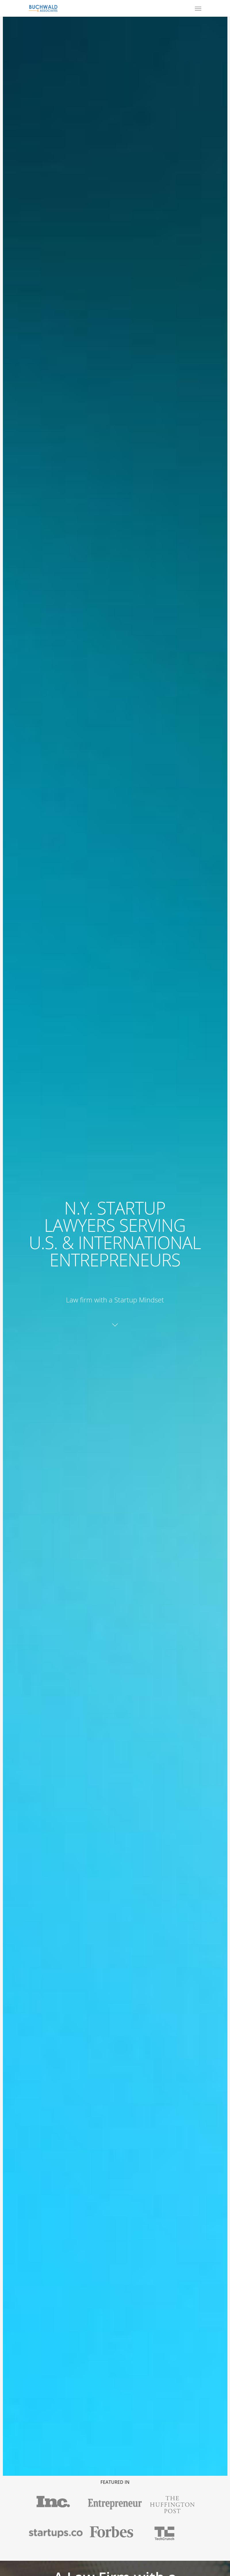 Buchwald & Associates - New York NY Lawyers